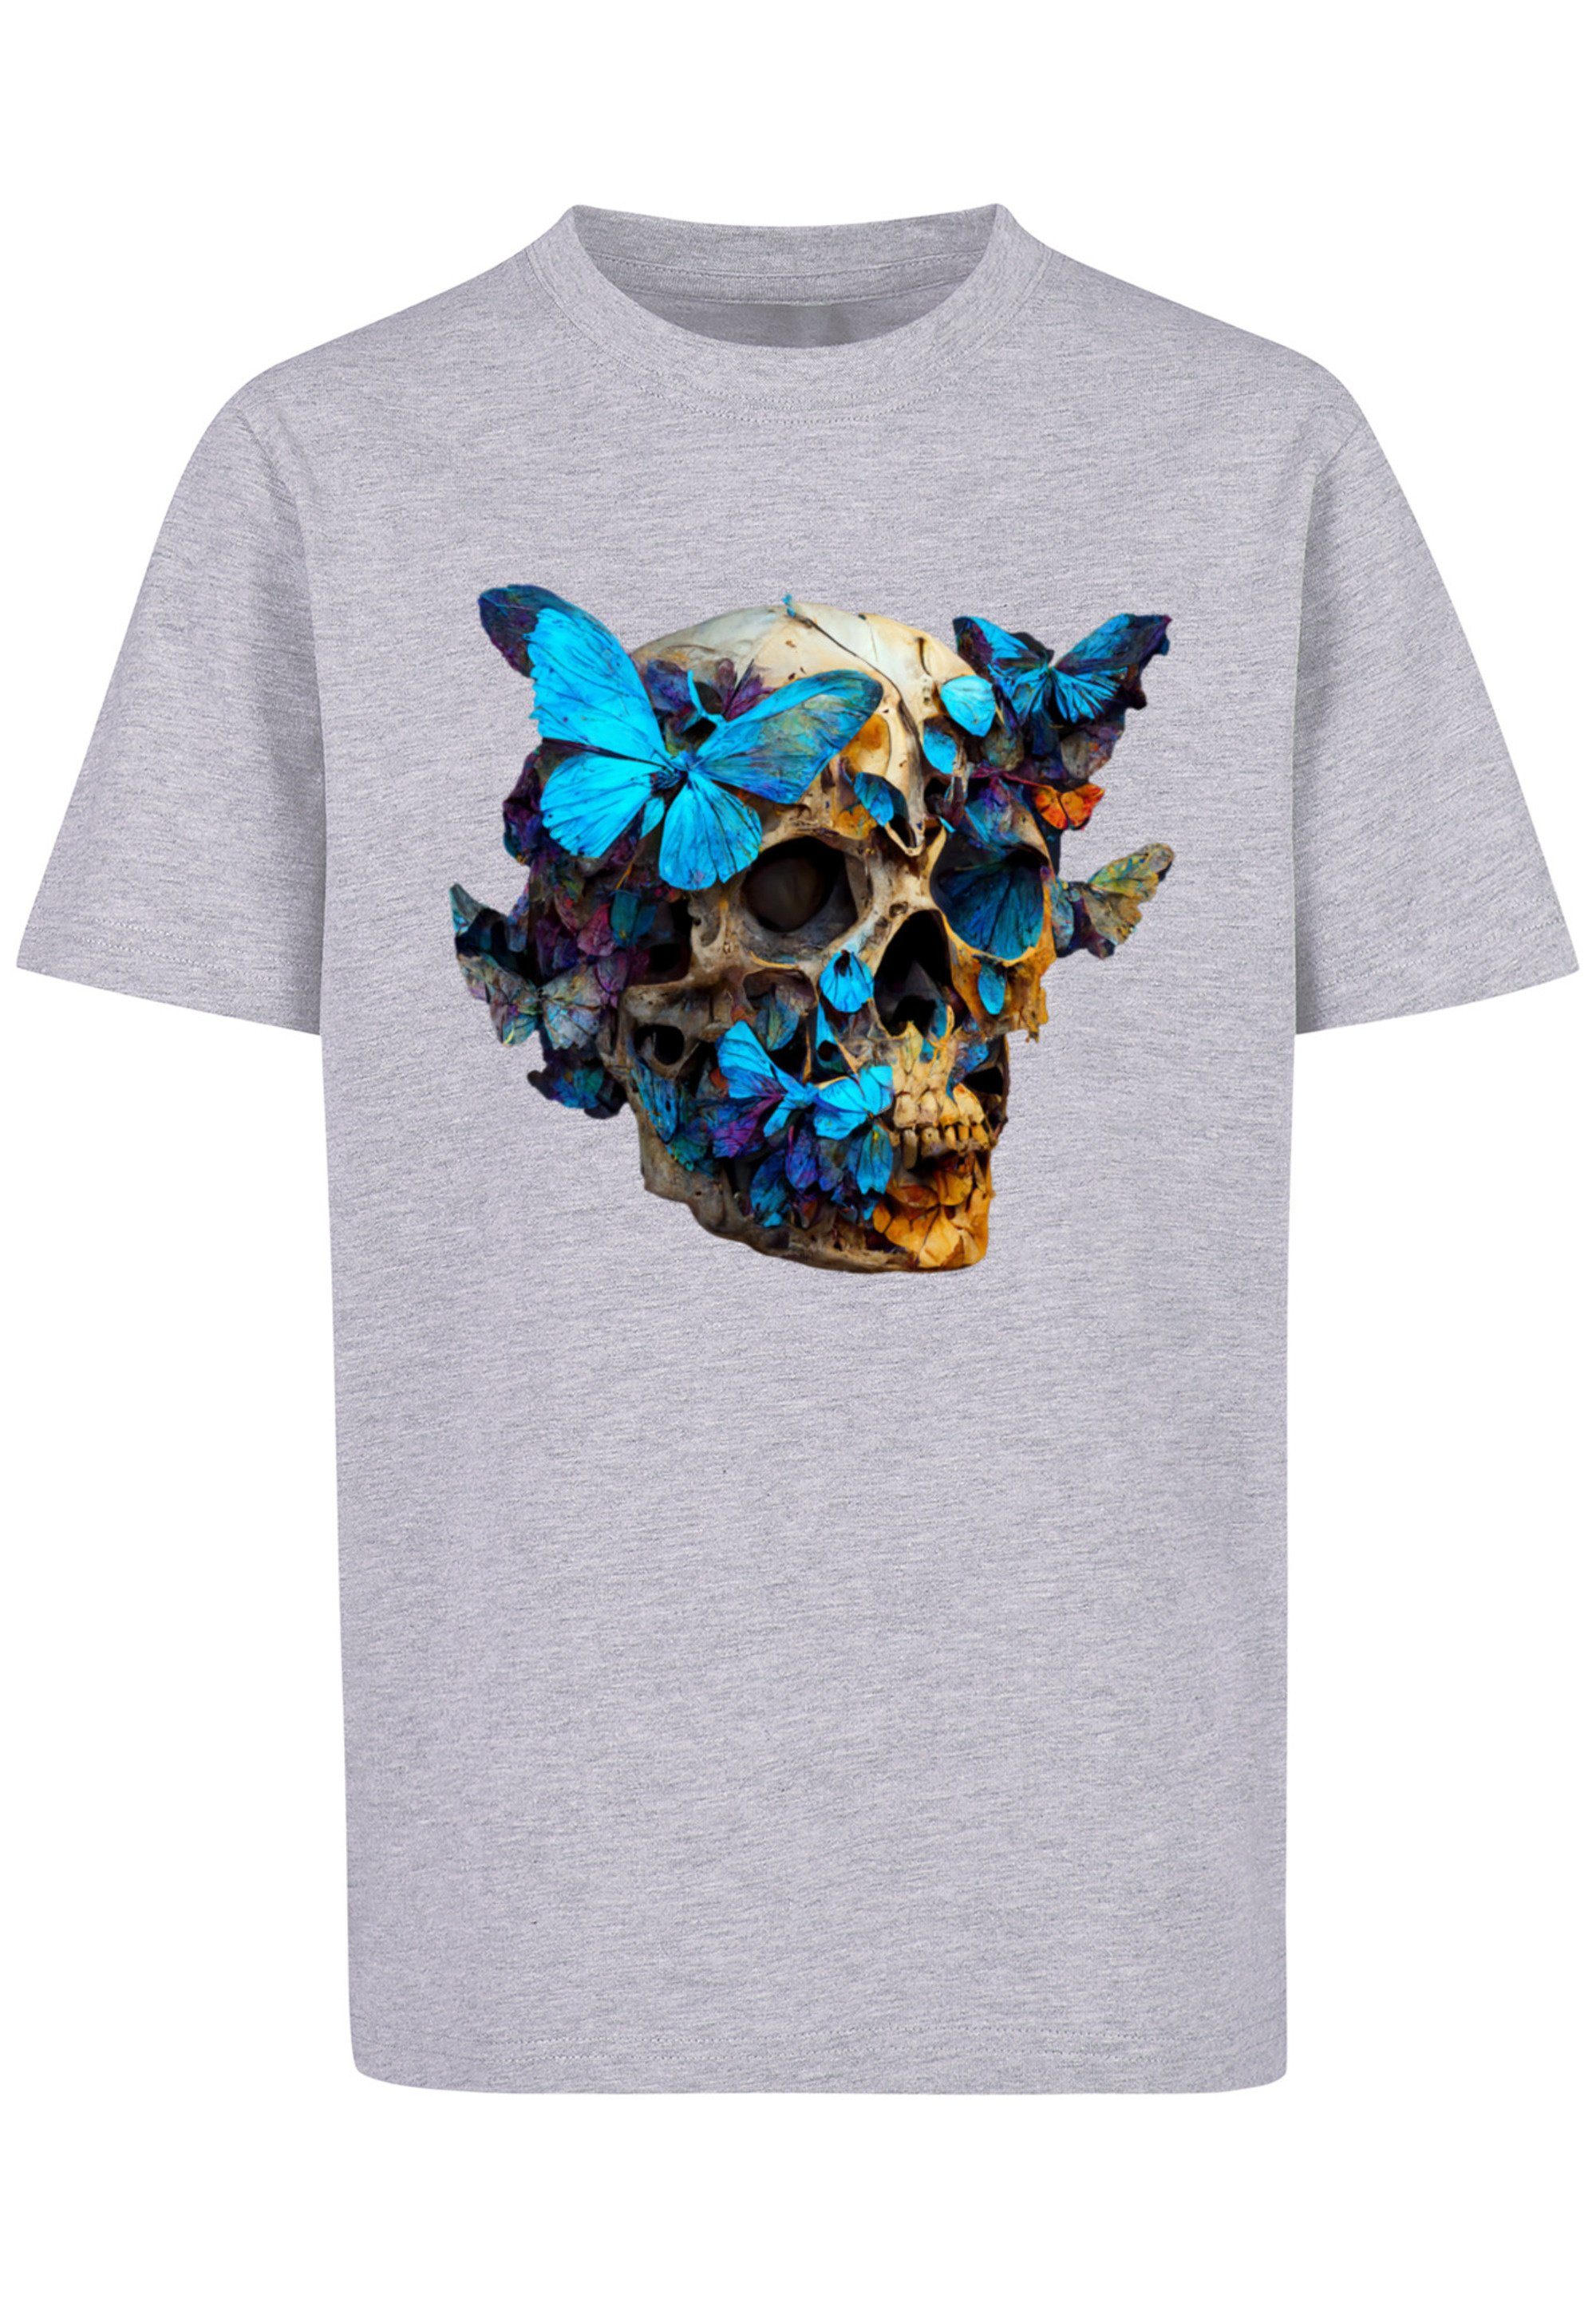 F4NT4STIC T-Shirt Schmetterling UNISEX TEE heather Print grey Skull